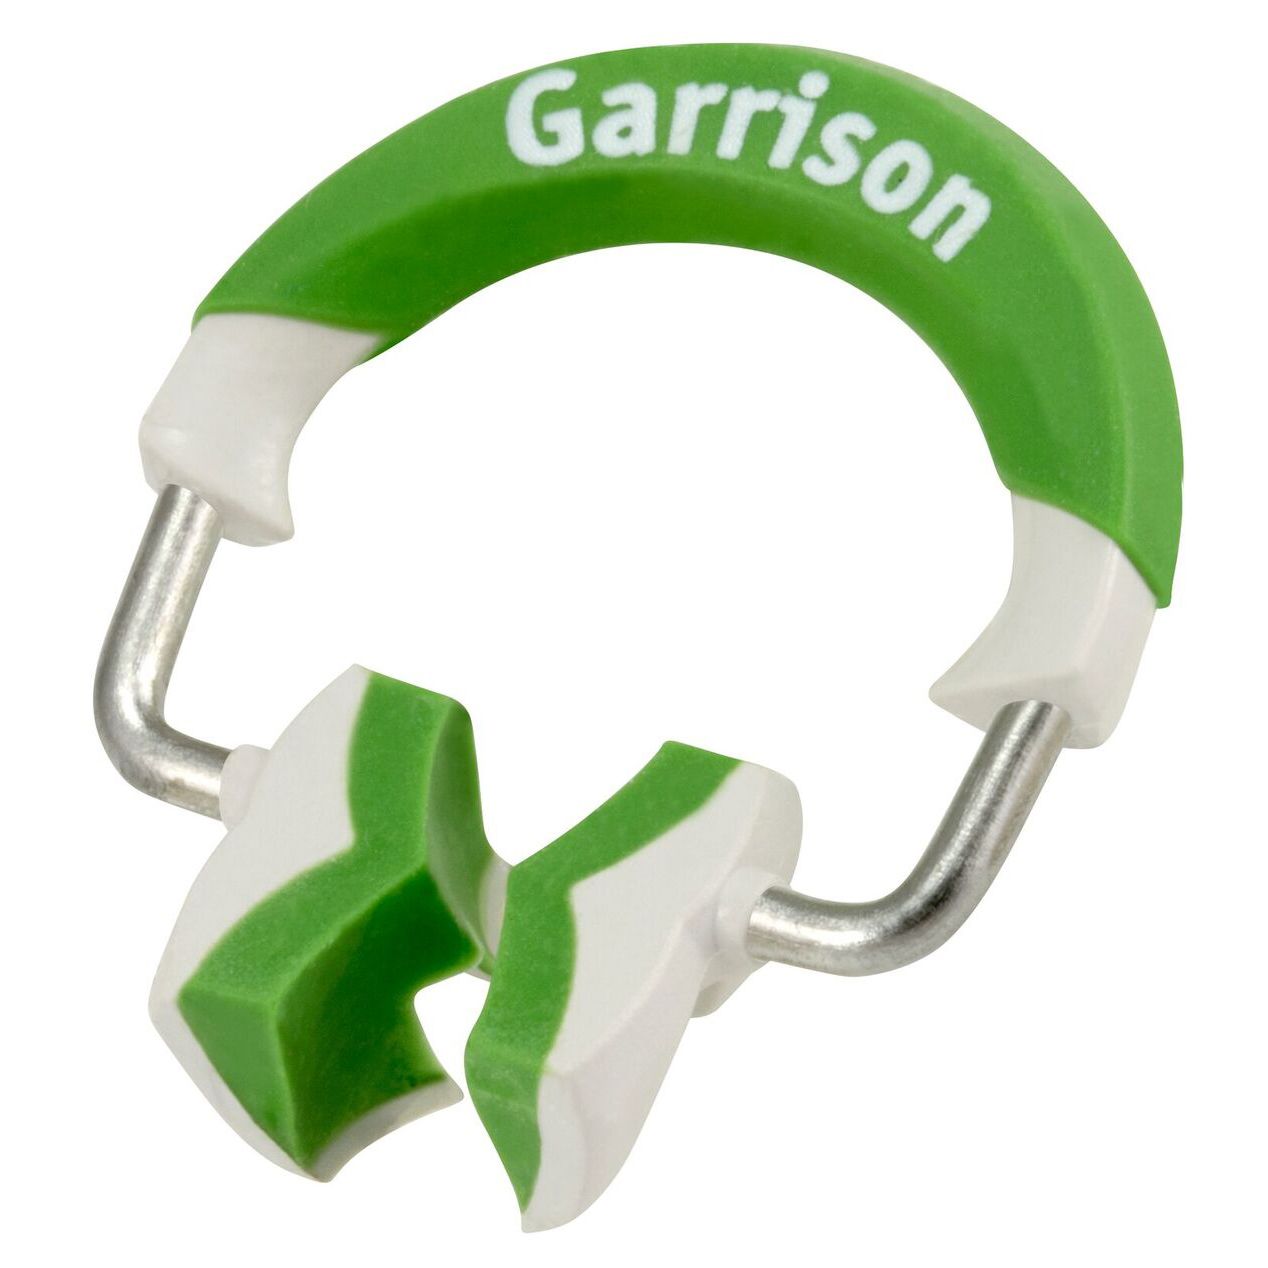 Garrison Dental Composi-Tight 3D Fusion Matrix Rings